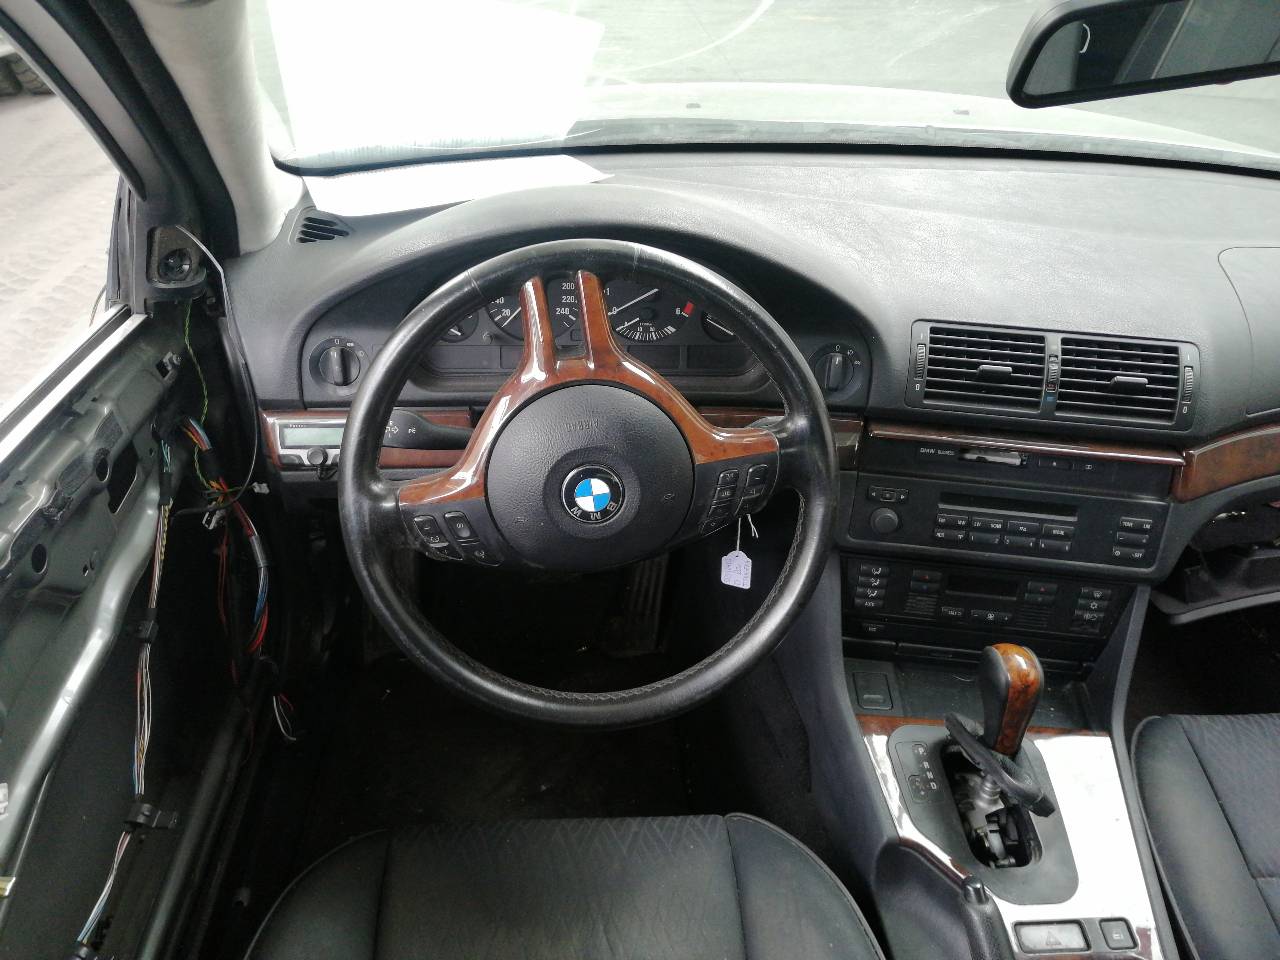 BMW 5 Series E39 (1995-2004) Other Interior Parts 7032926, 4PUERTAS 24219886